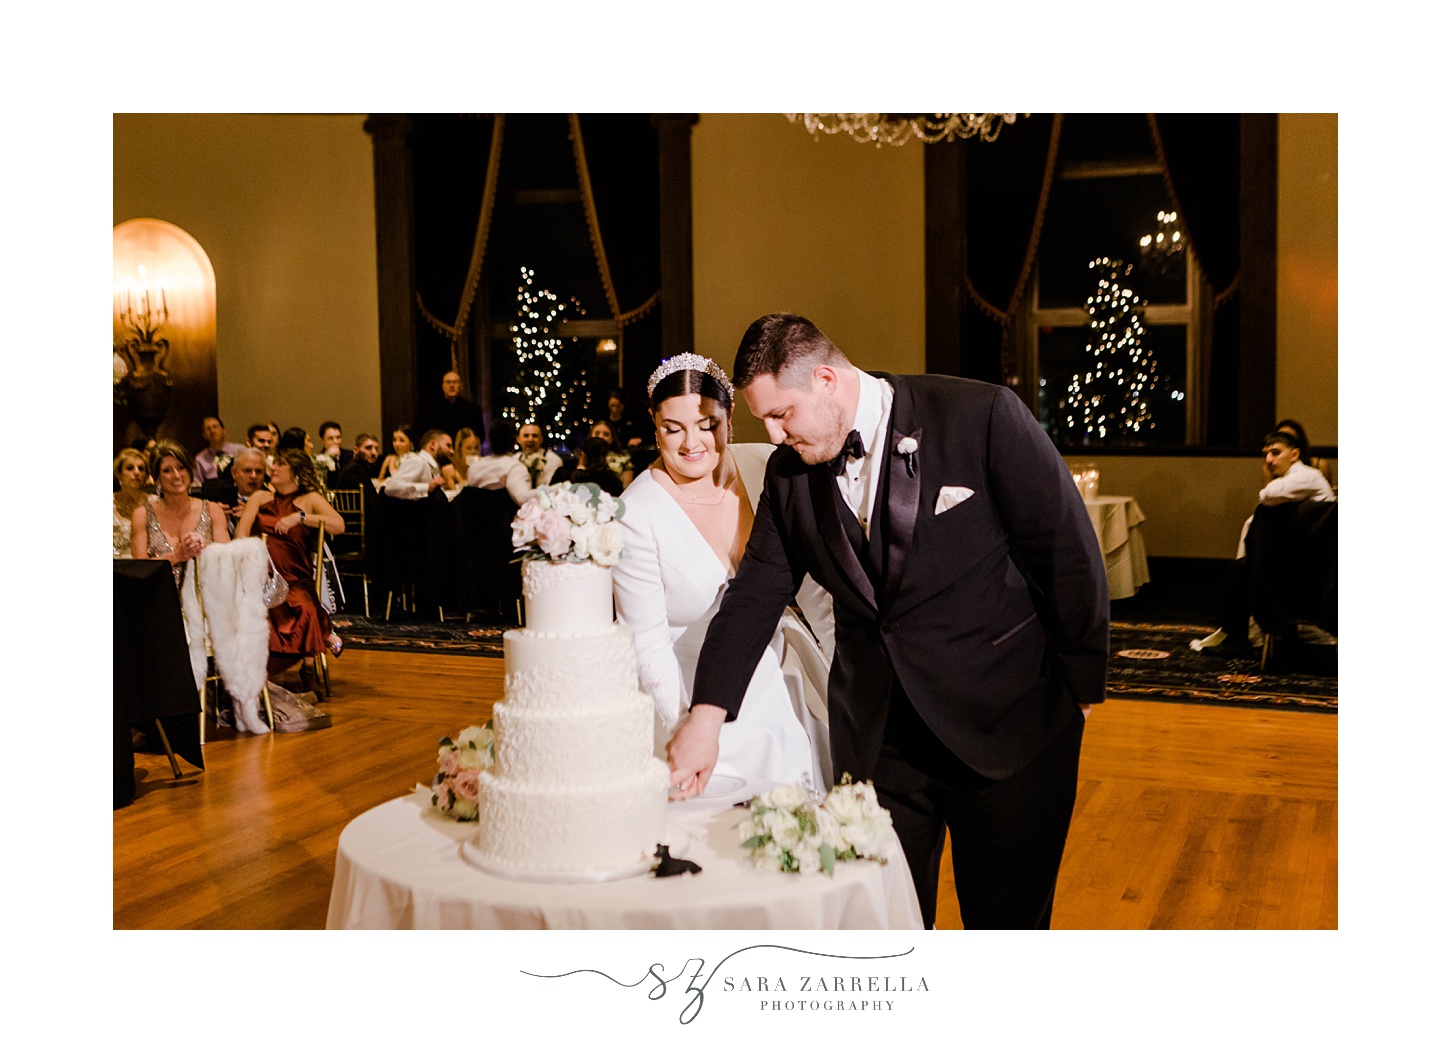 newlyweds cut wedding cake in center of ballroom